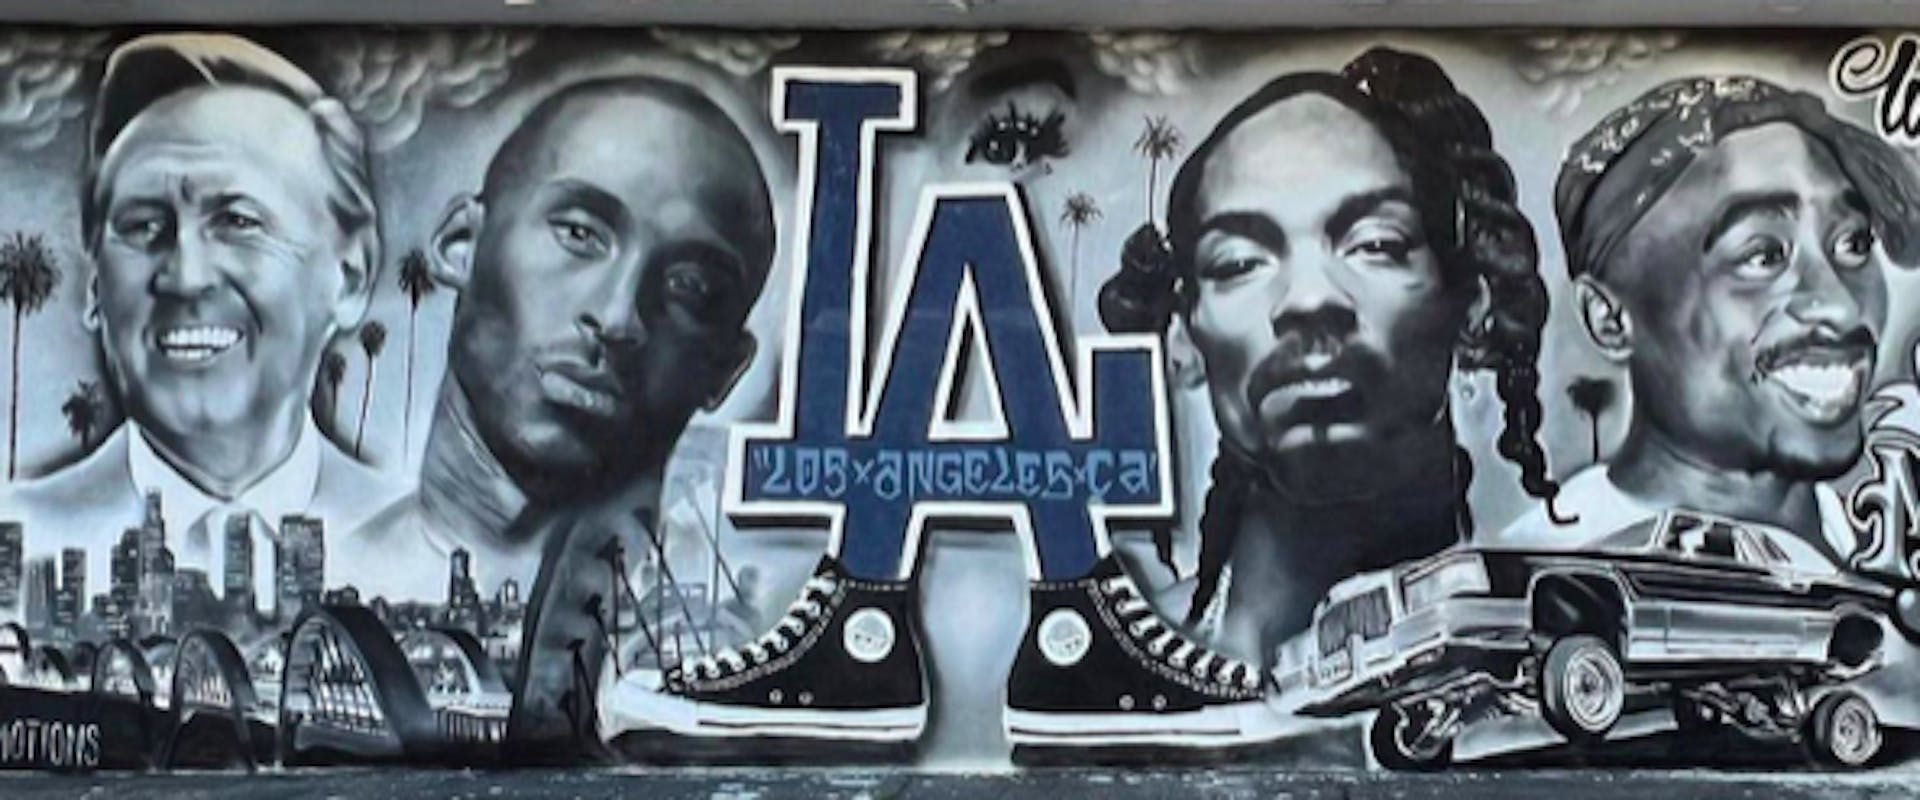 Snoop Dogg, 2Pac, Kibe Bryant Bellflower Mural @Speedy Auto Tint